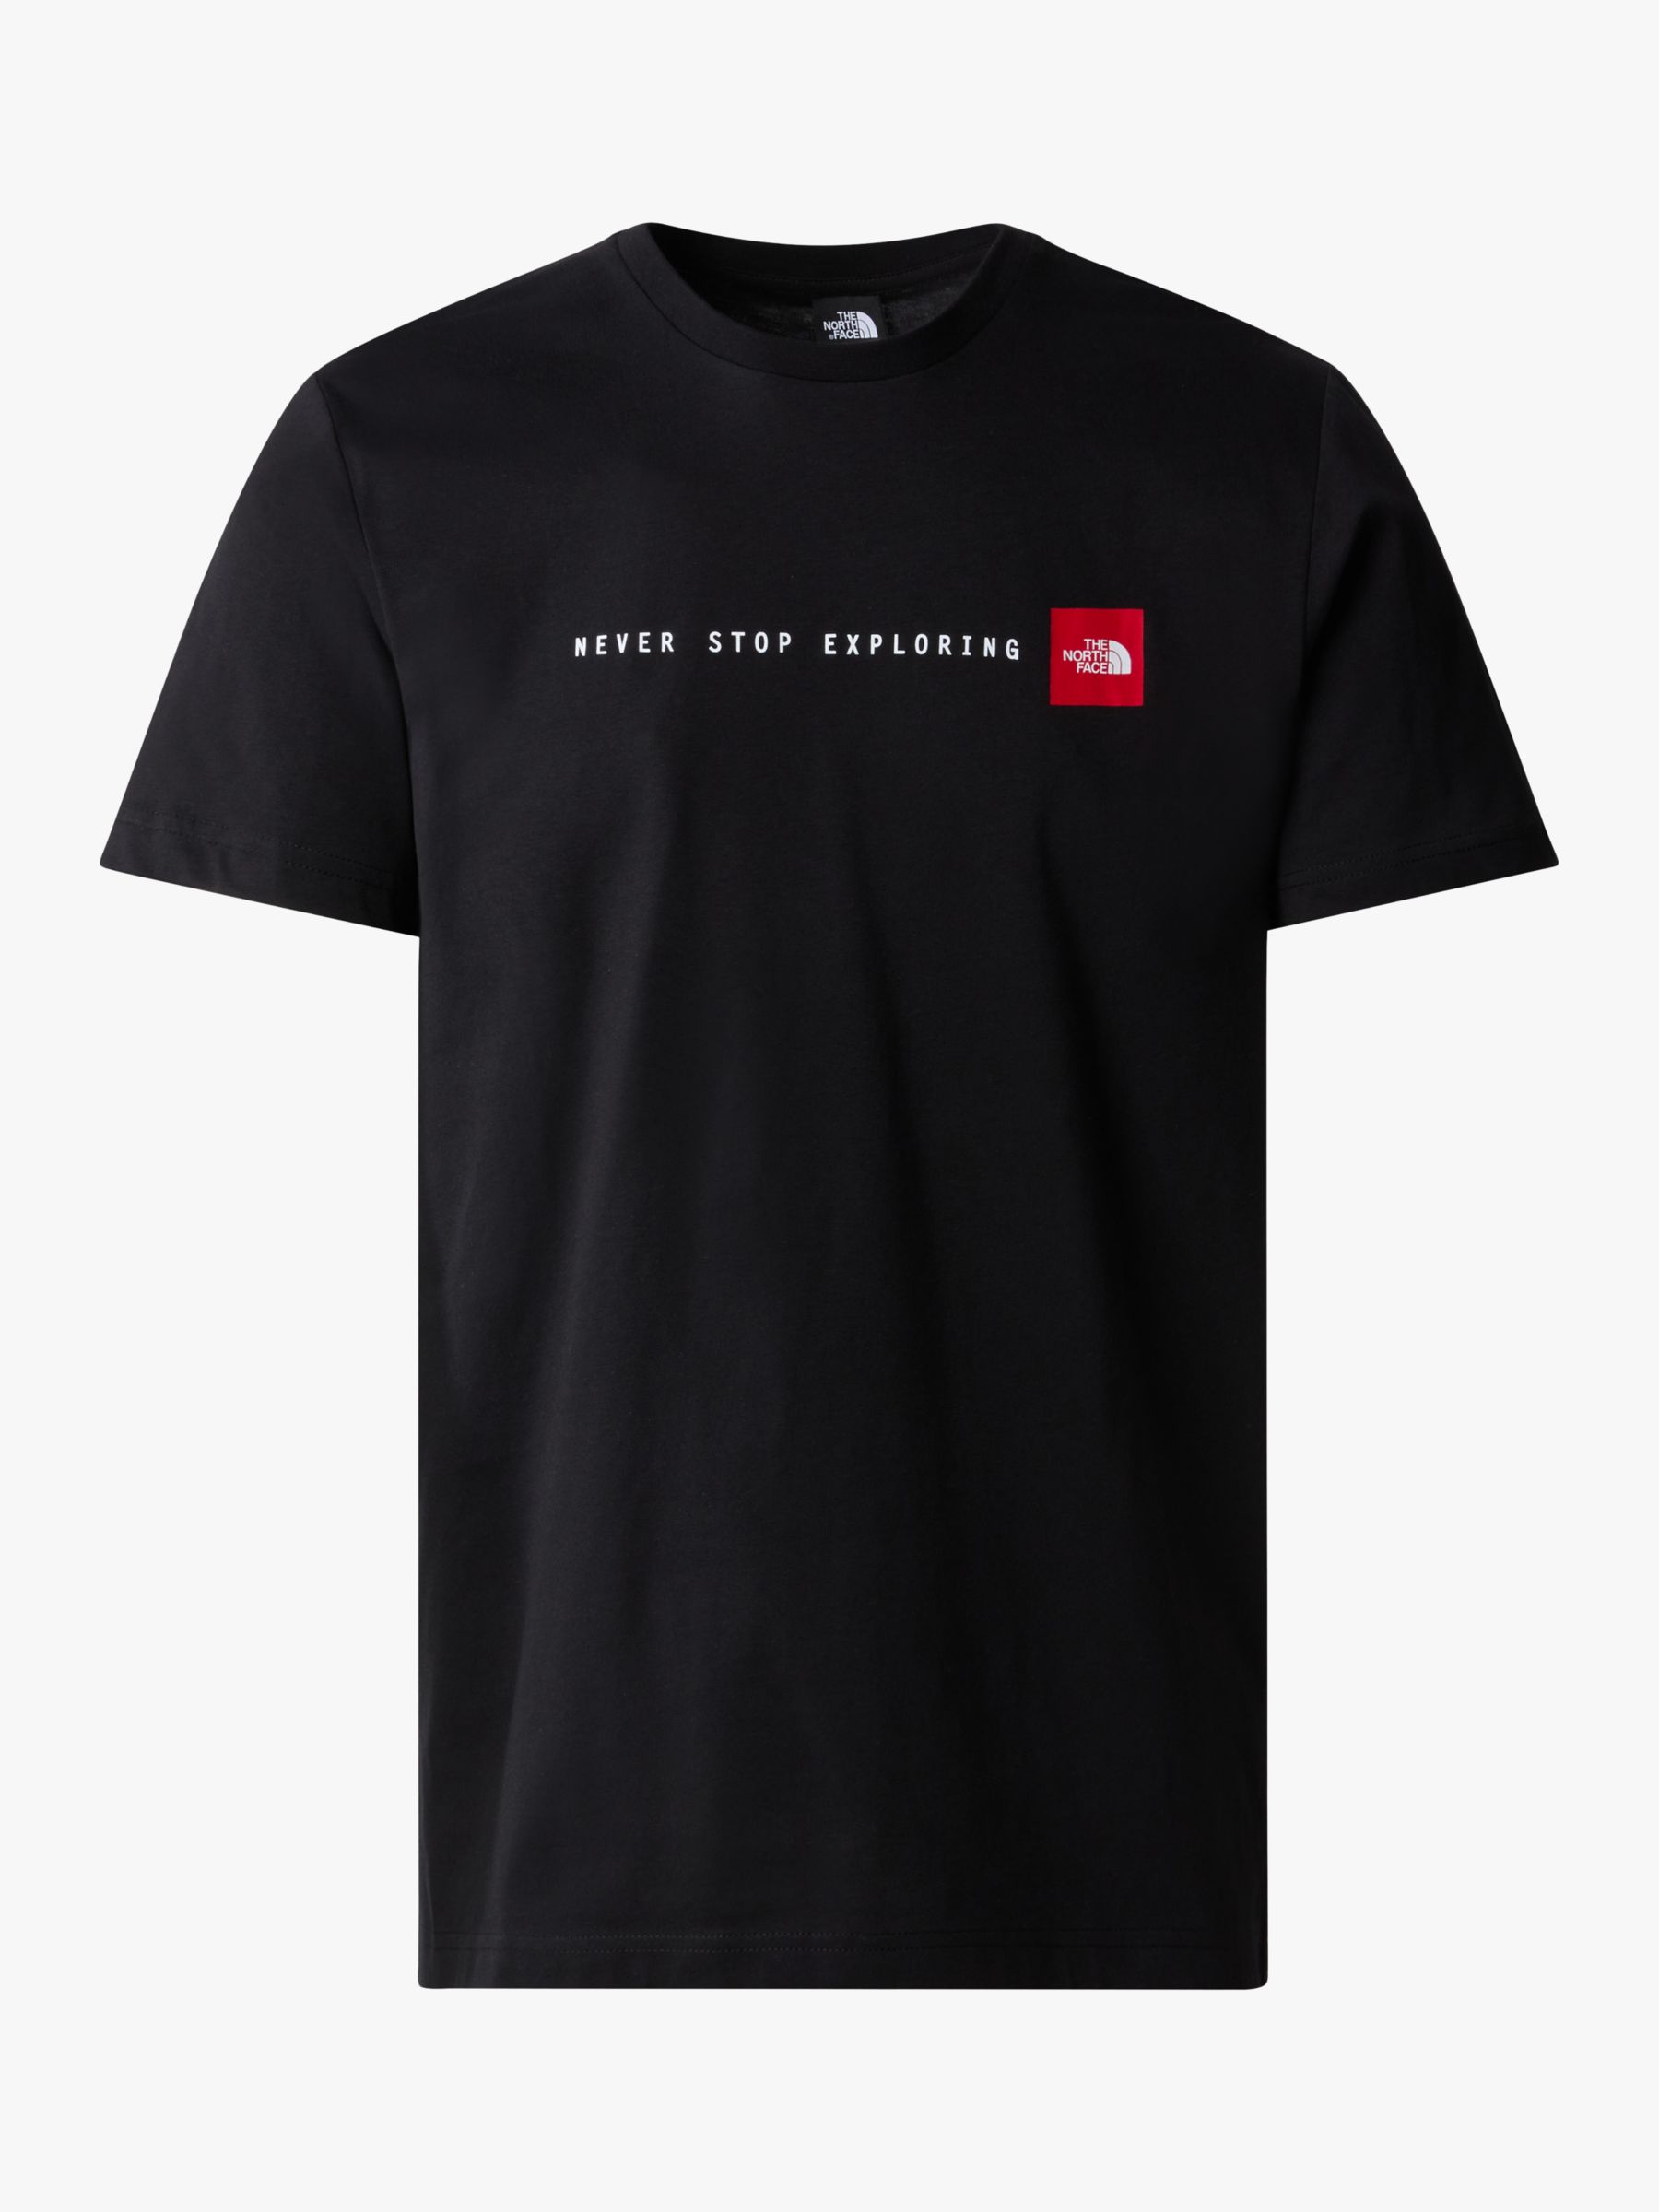 The North Face Short Sleeve Never Stop Exploring T-Shirt, Black, XL